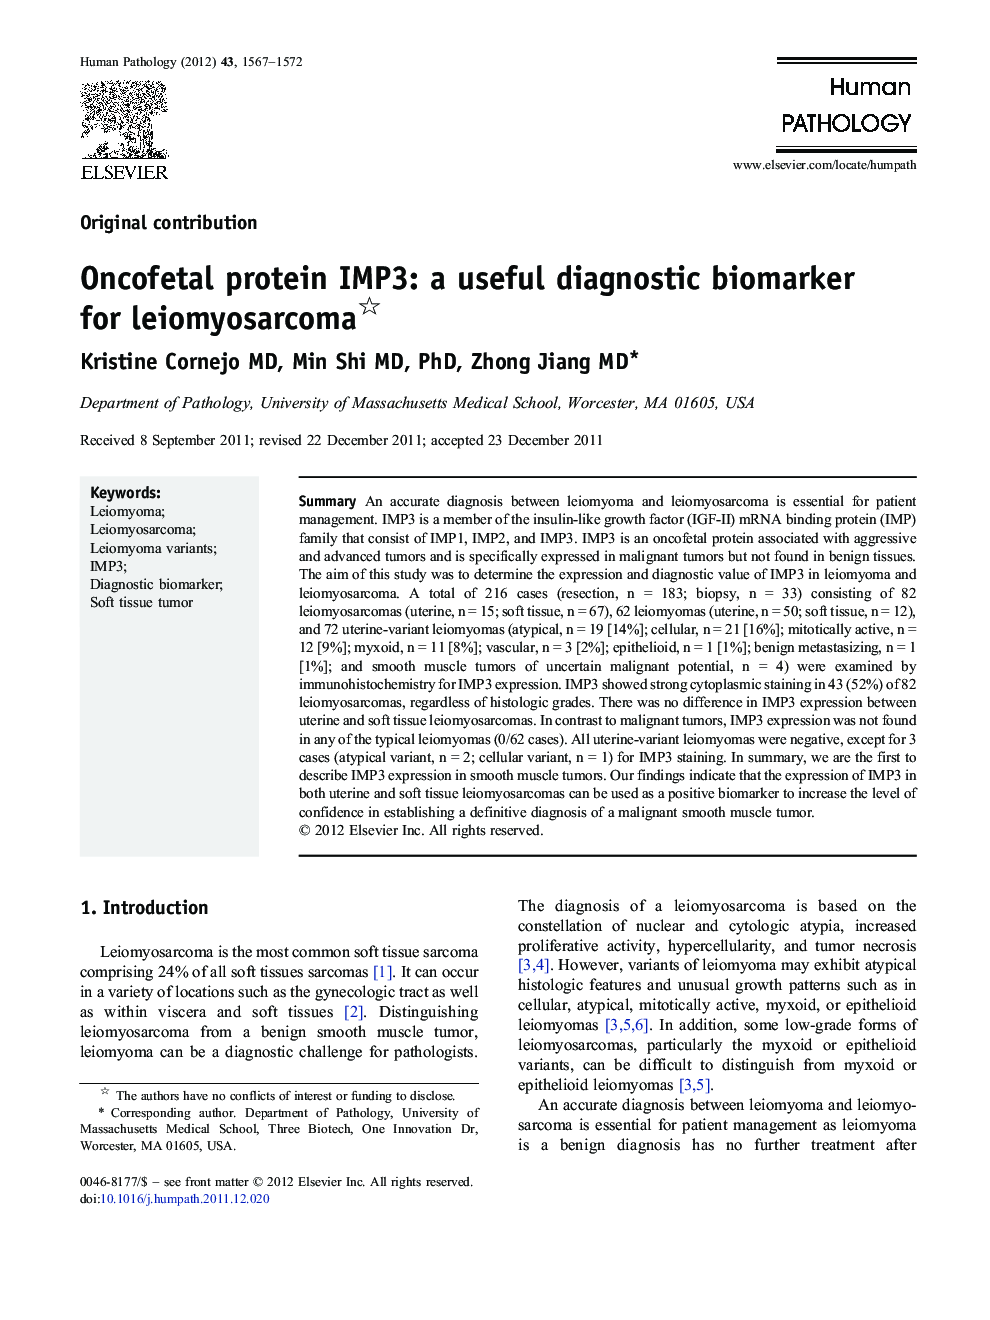 Oncofetal protein IMP3: a useful diagnostic biomarker for leiomyosarcoma 